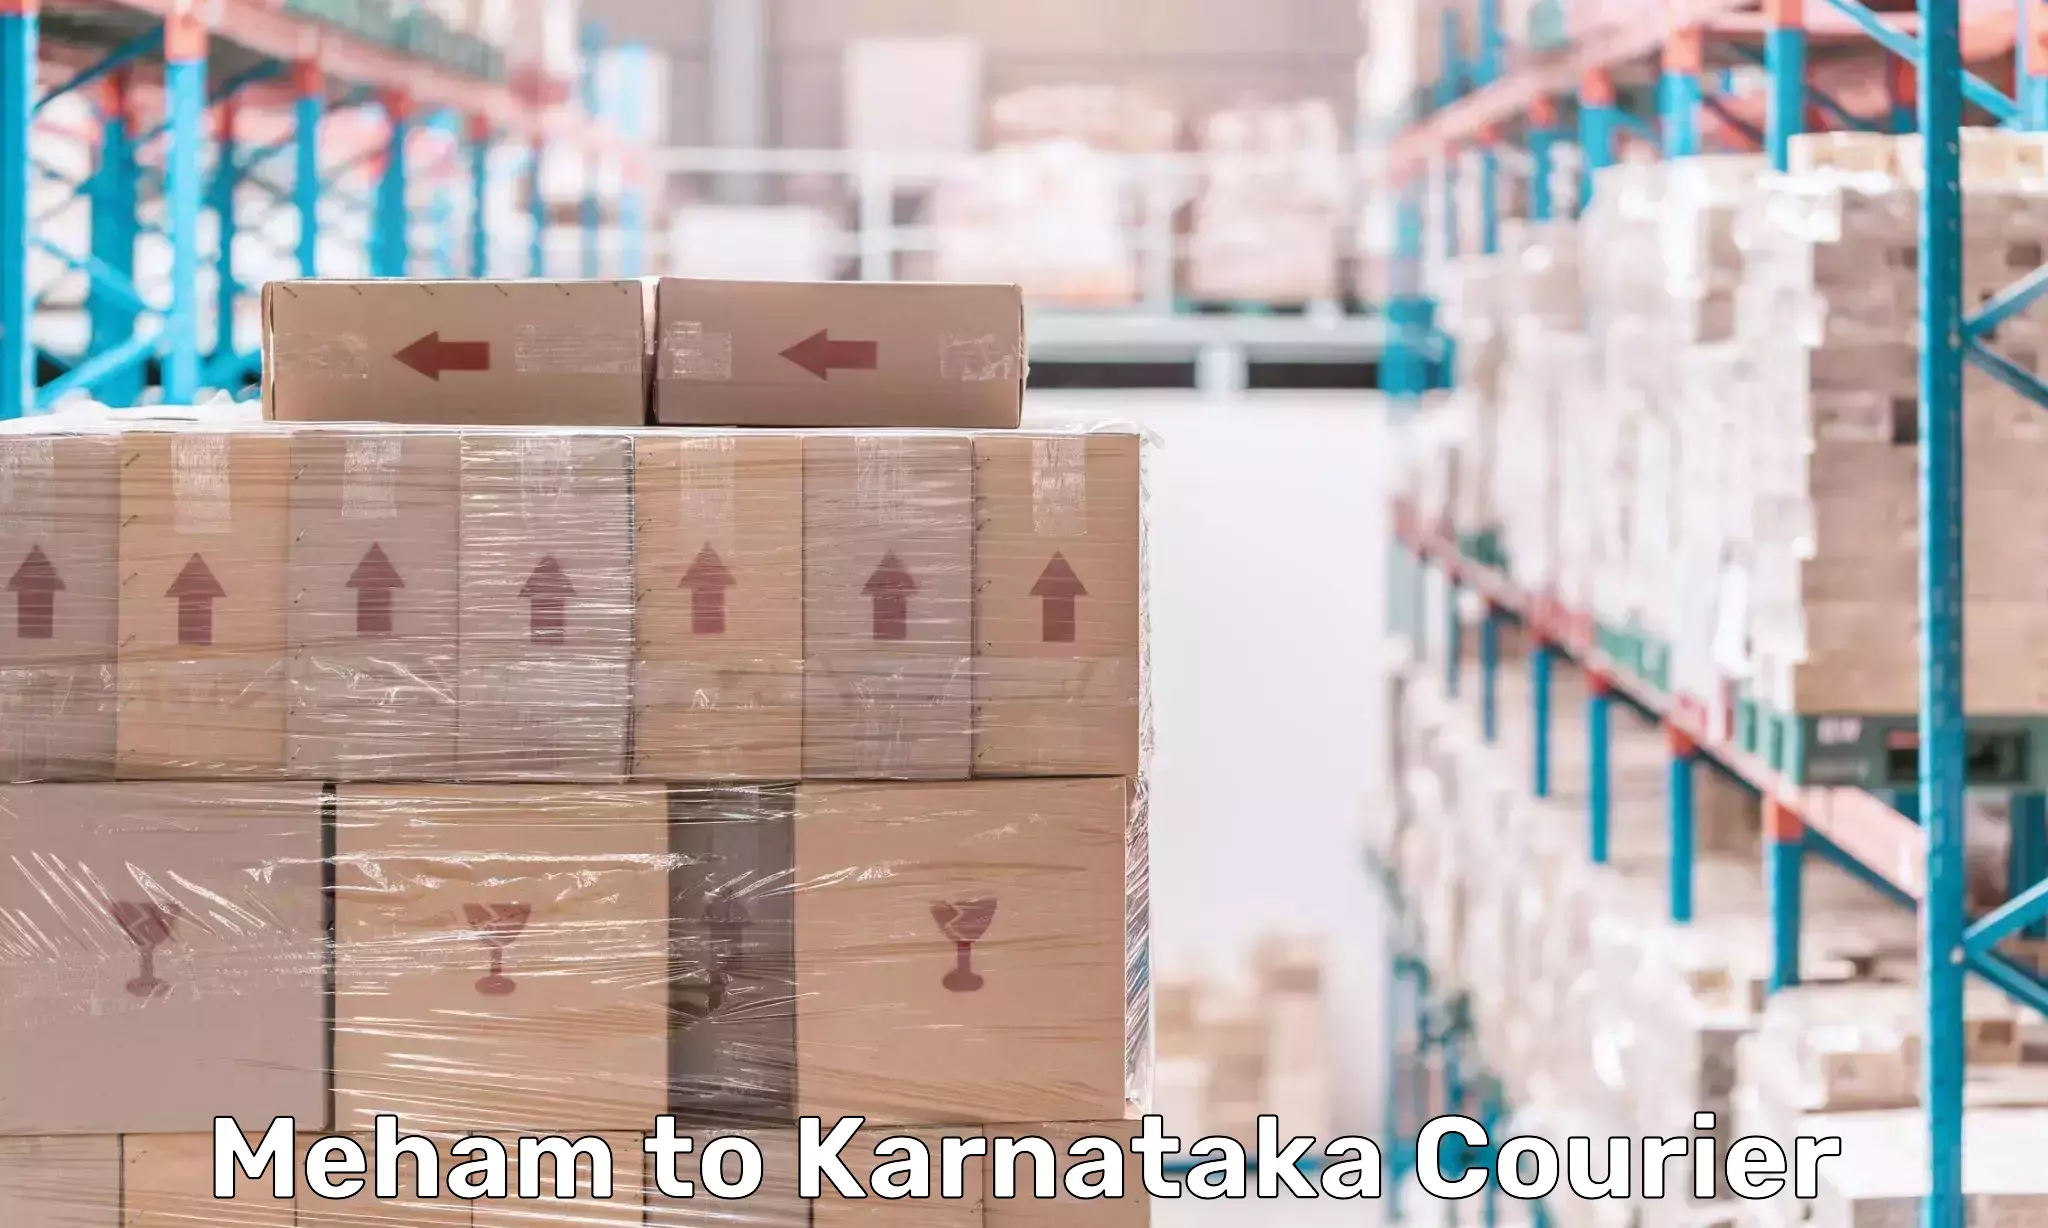 Package delivery network Meham to Karnataka